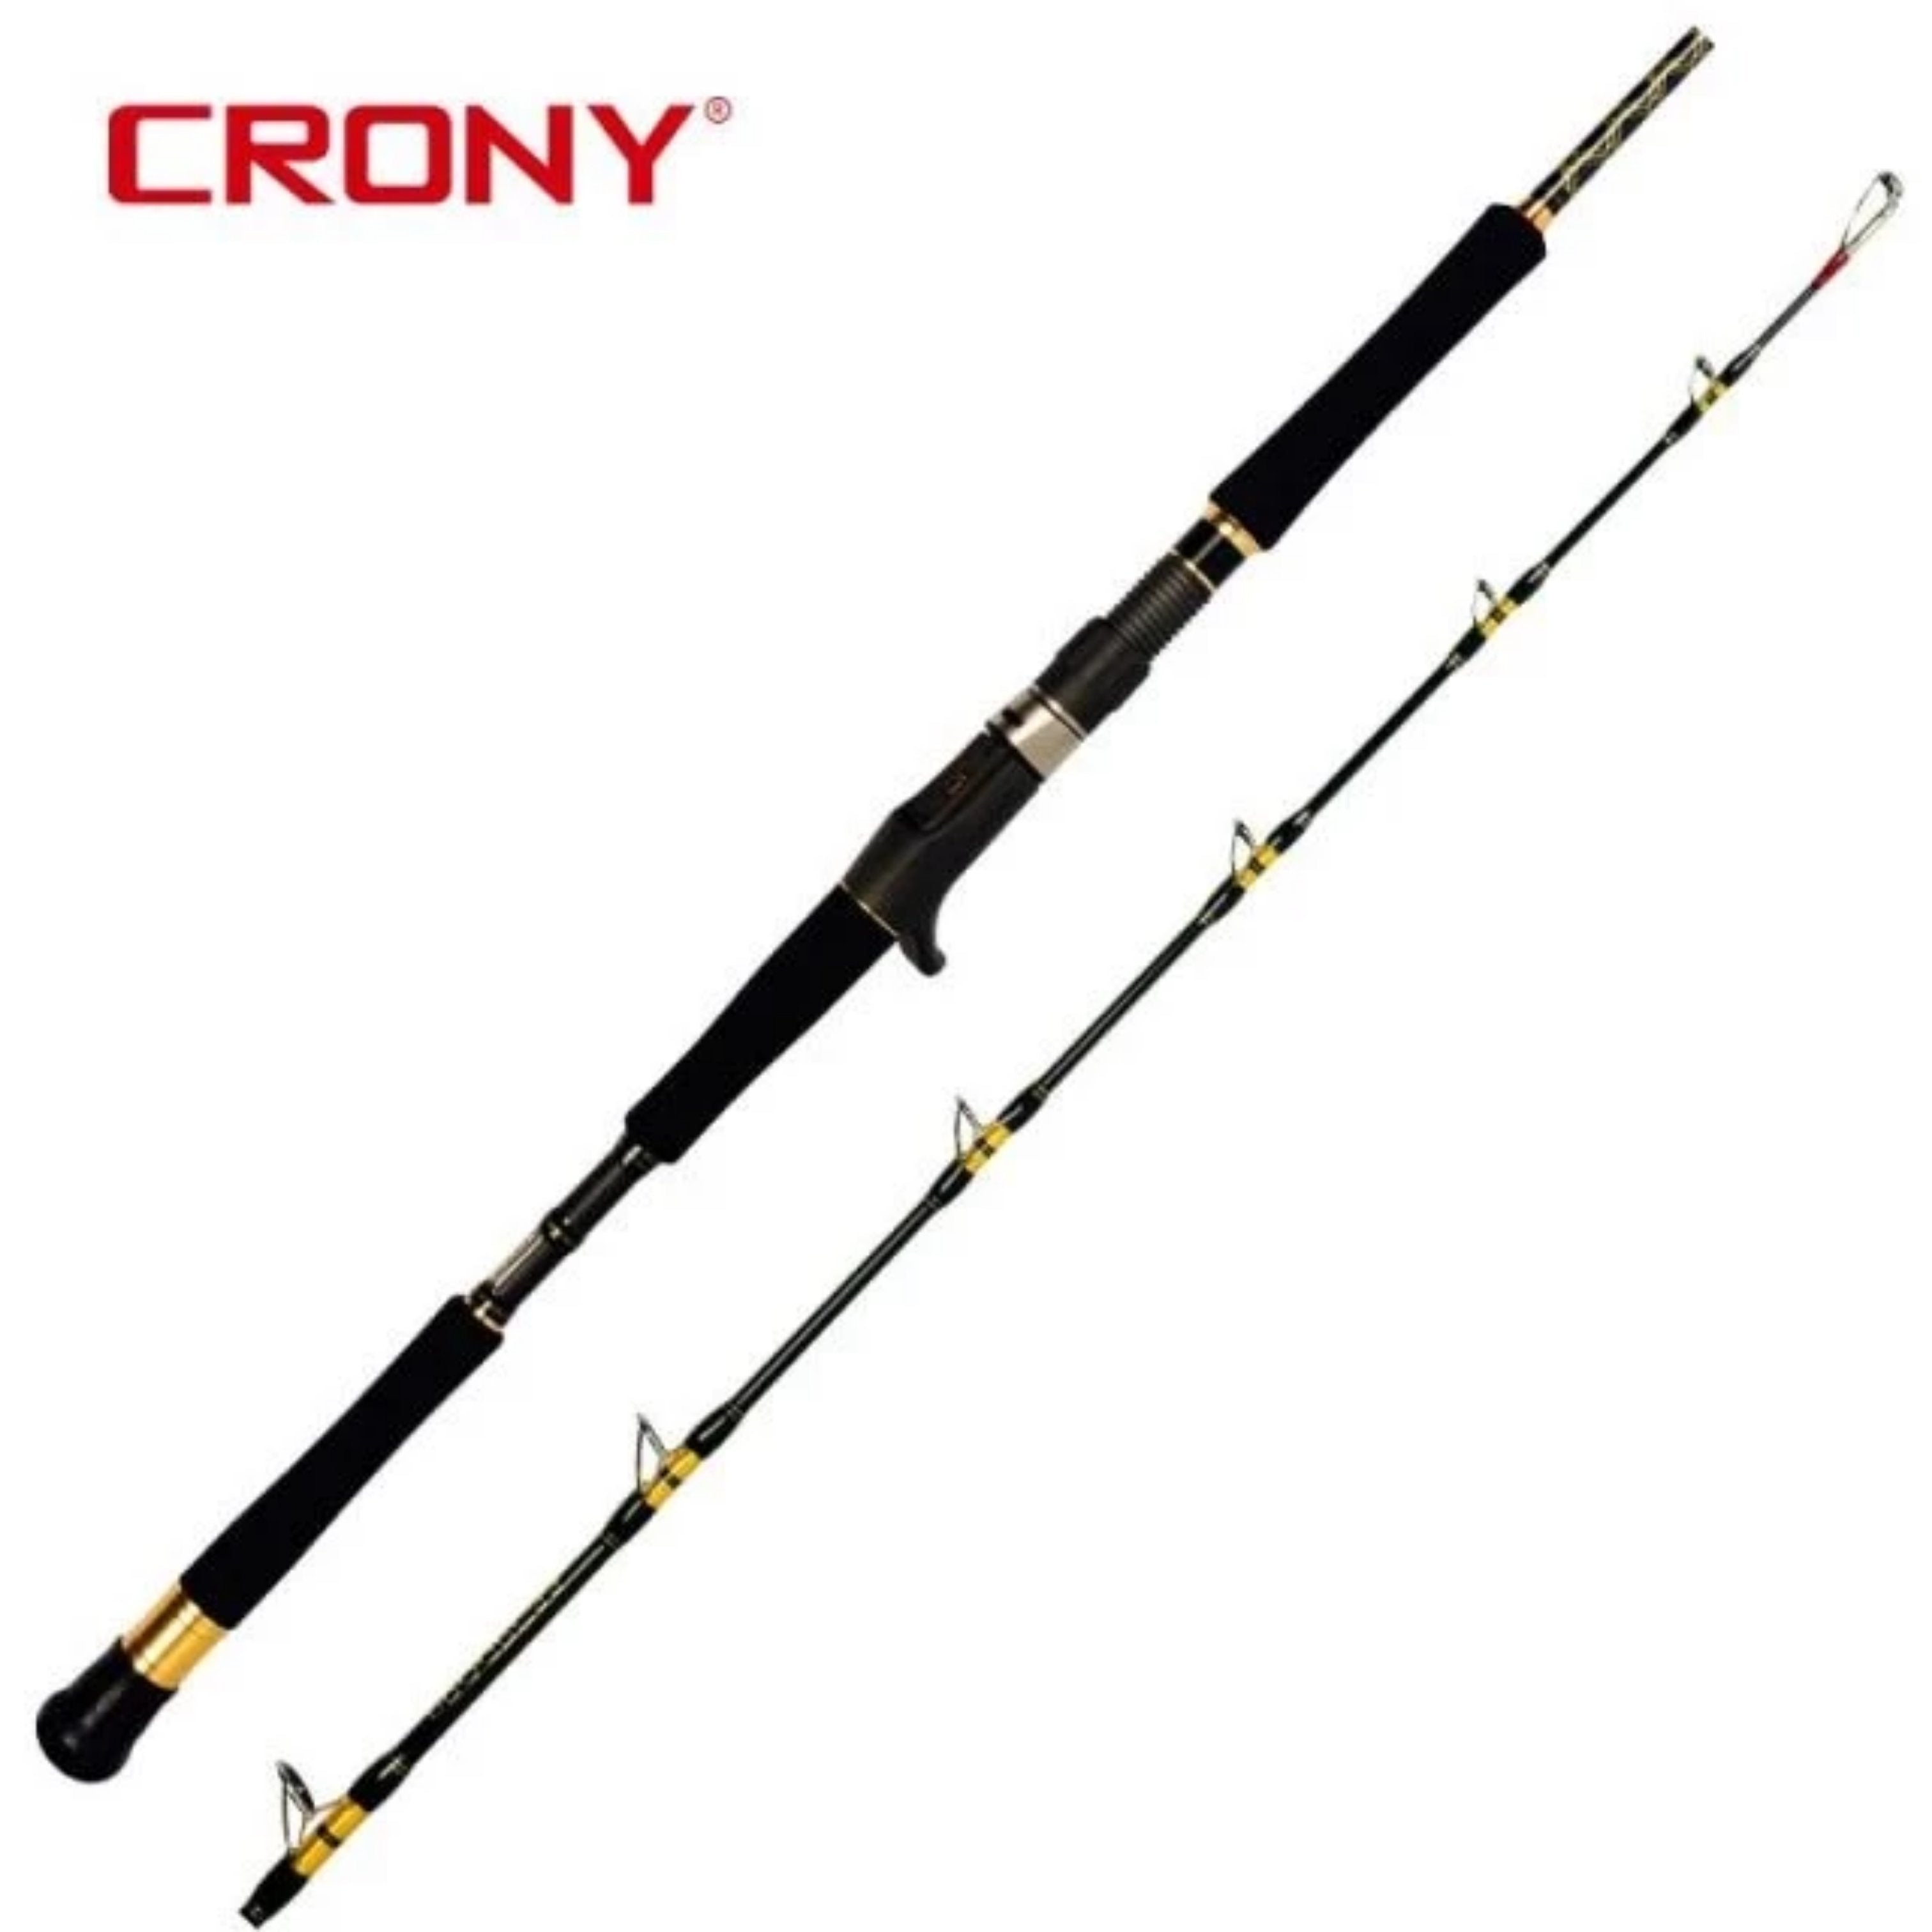 Fishing rod Cronny Jig Progress series one pce 1.73m